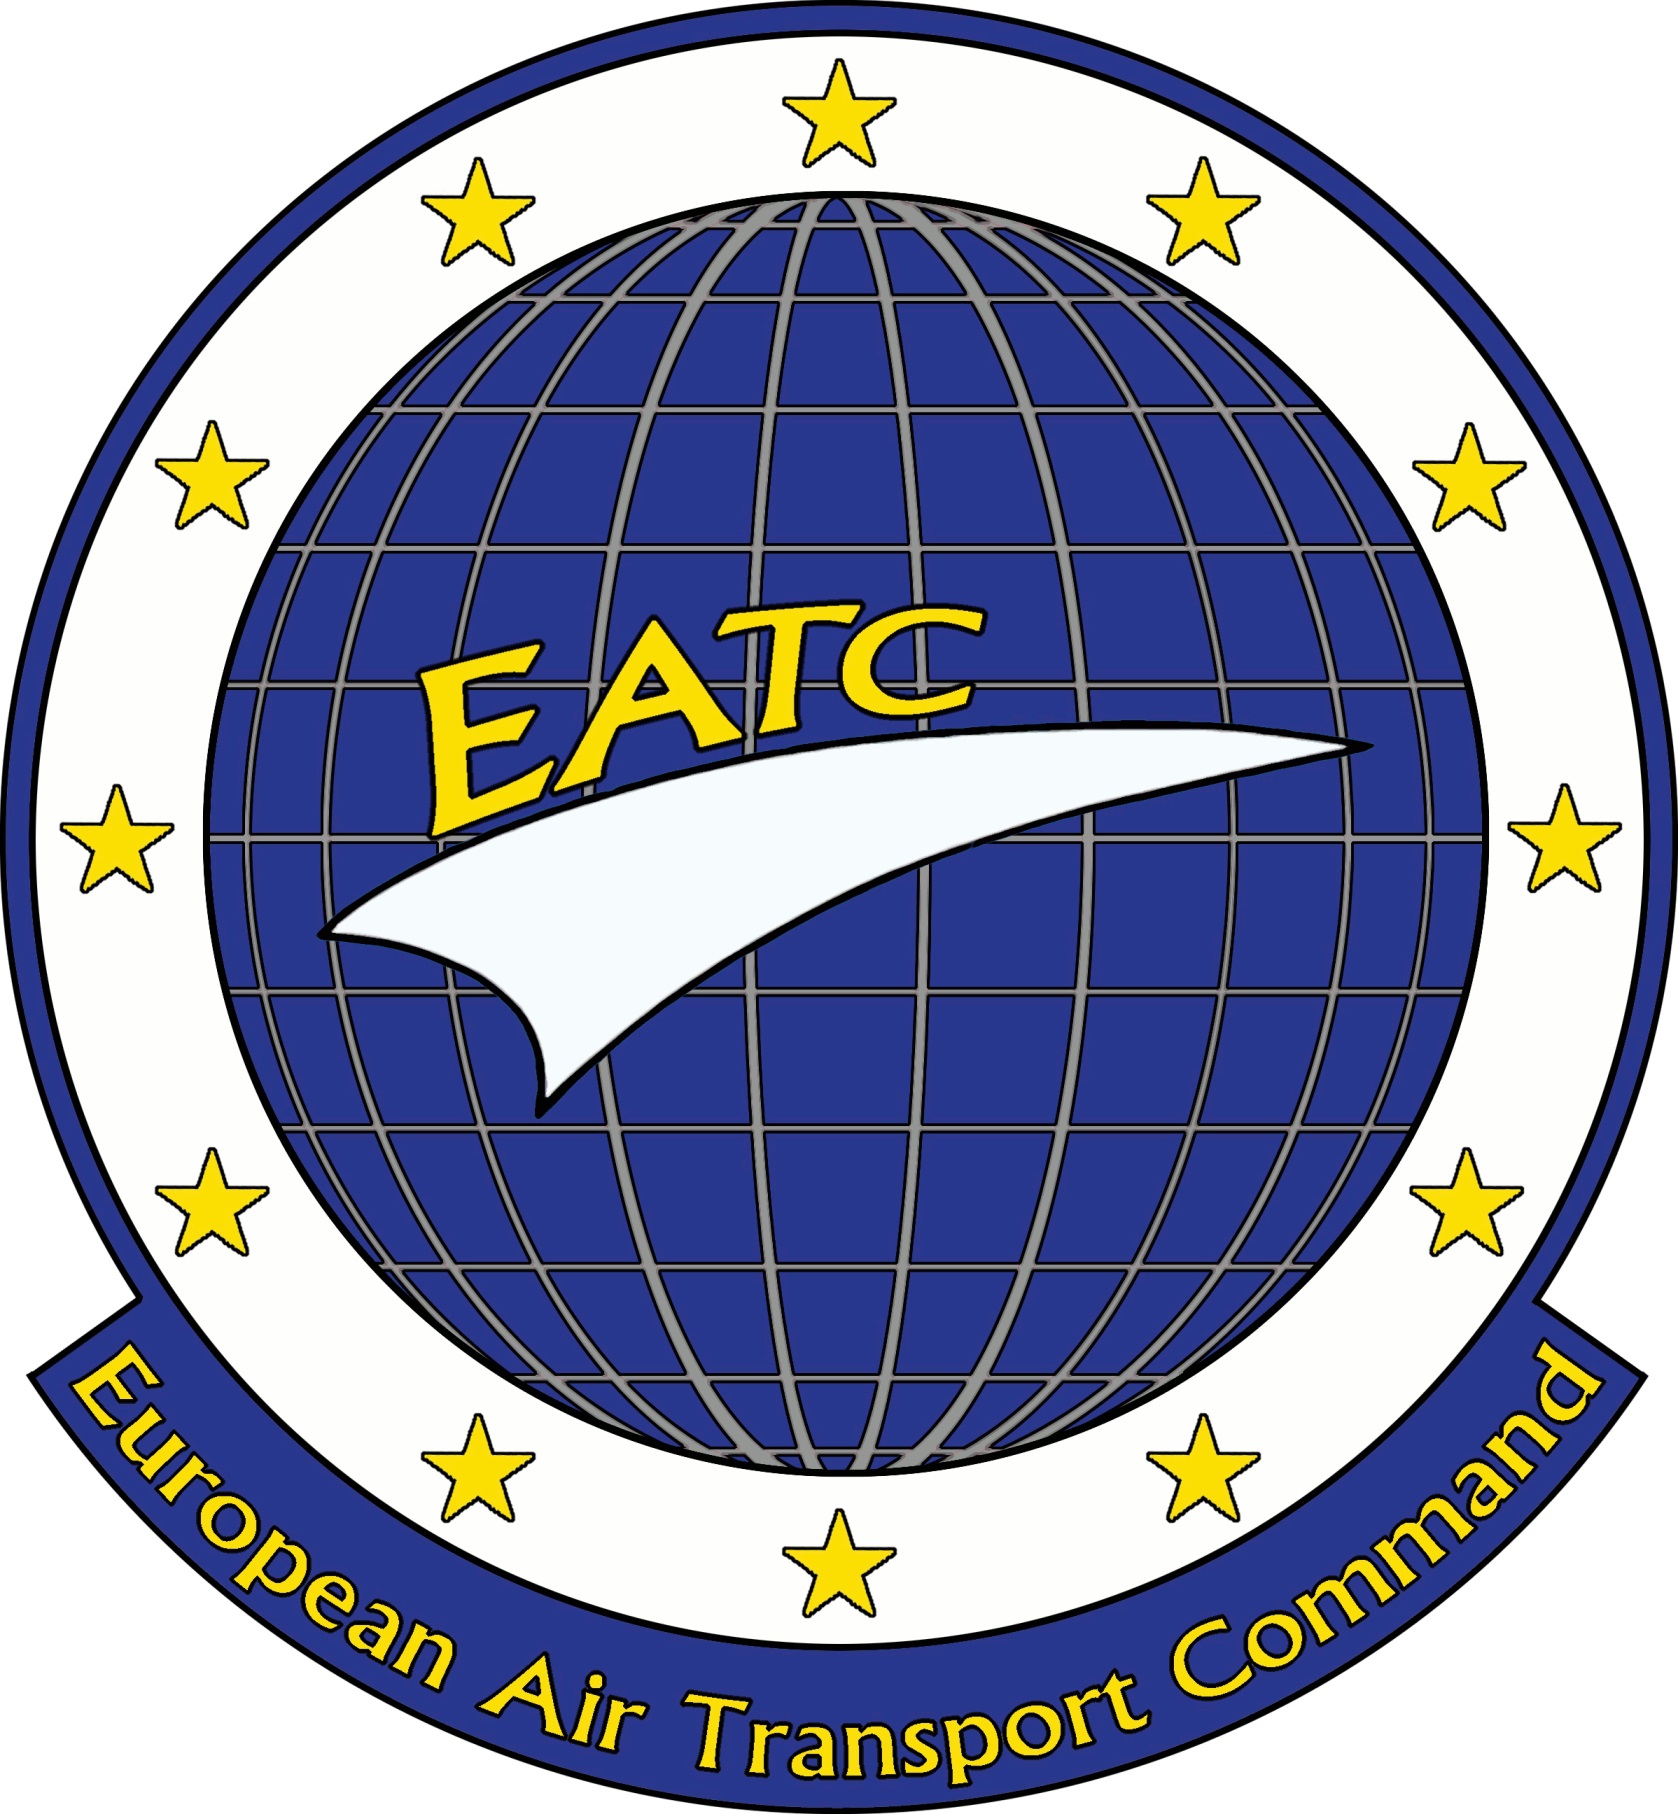 Watch EATC's latest video